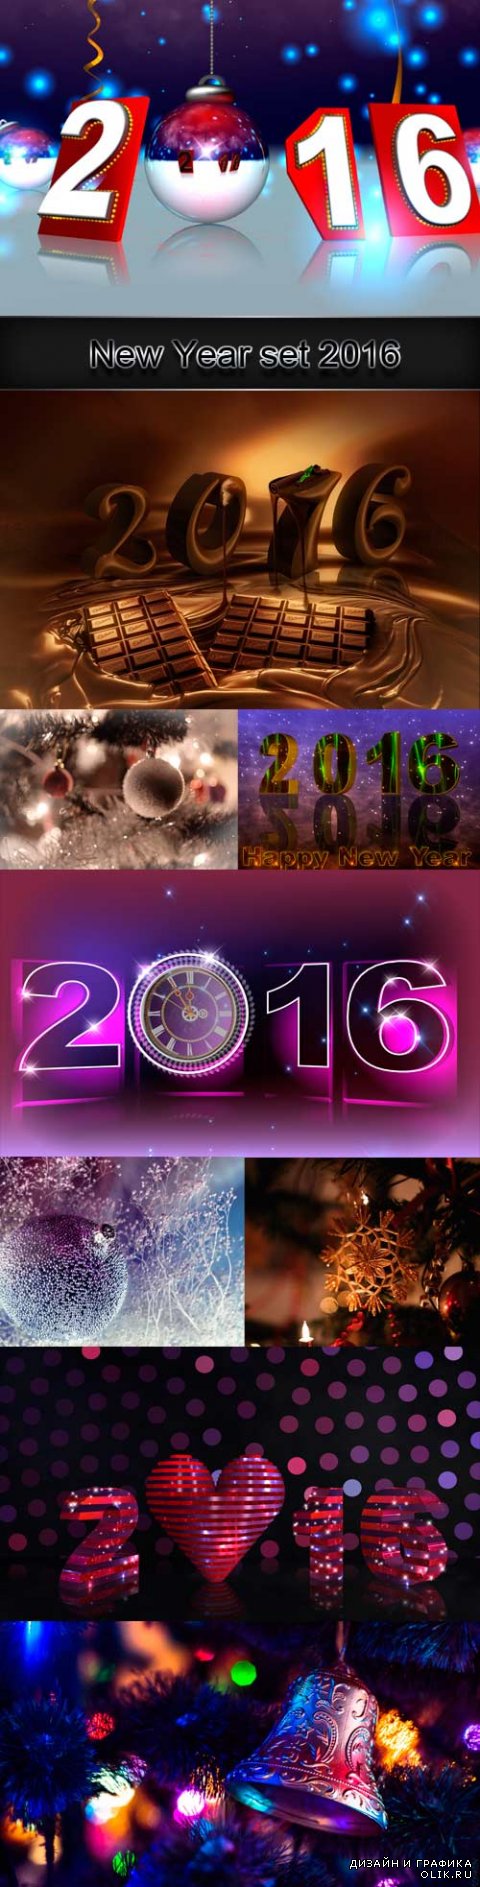 New Year set 2016